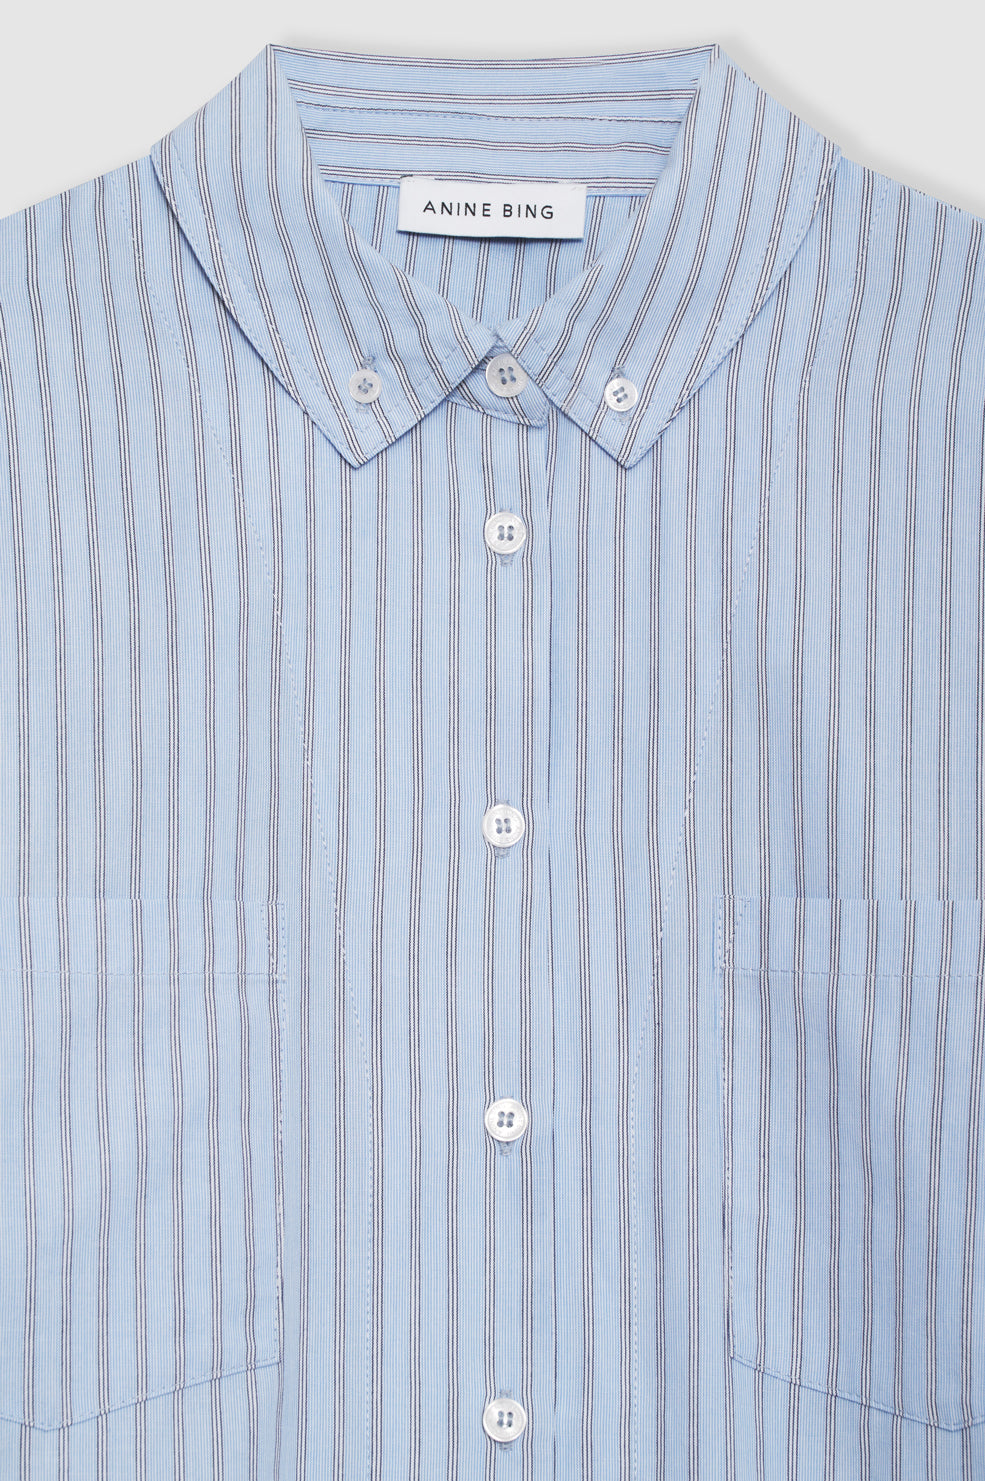 ANINE BING Catherine Shirt - Blue And White Stripe